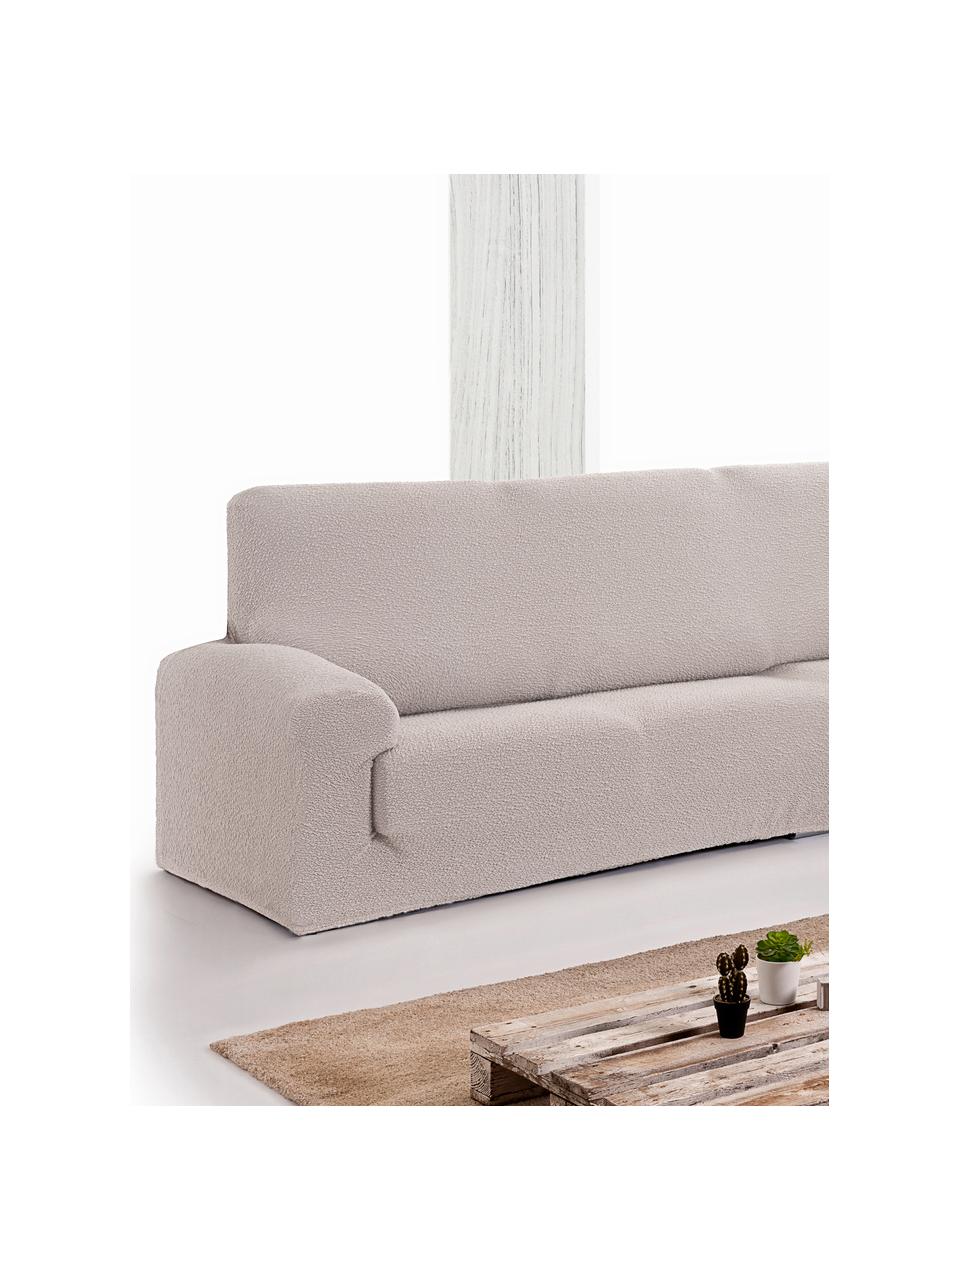 Funda de sofá rinconero Roc, 55% poliéster, 35% algodón, 10% elastómero, Crema, An 600 x Al 120 cm